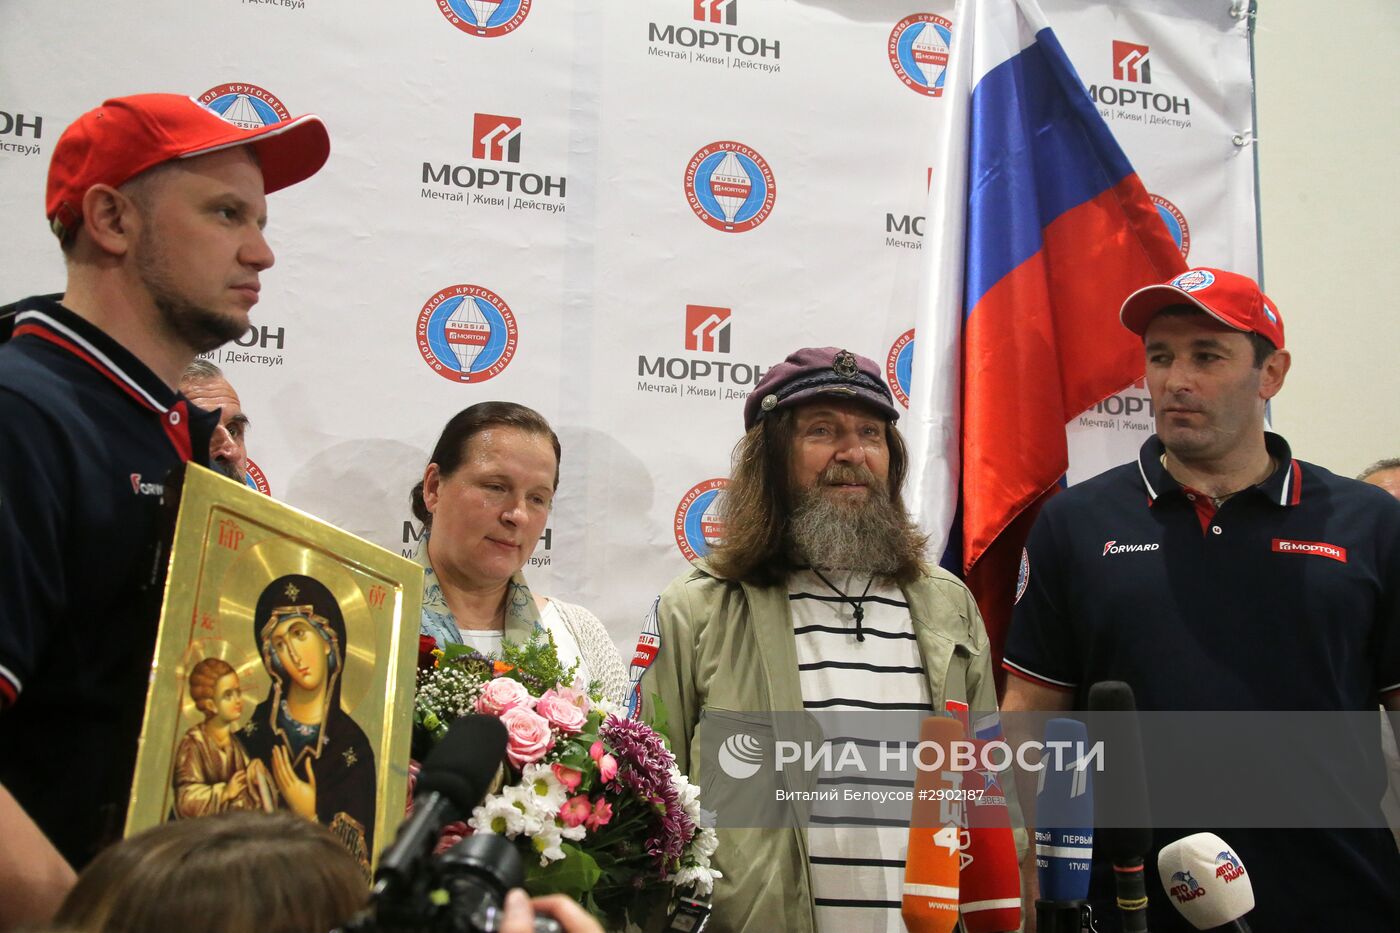 Встреча Федора Конюхова после рекордного перелета на воздушном шаре вокруг земли